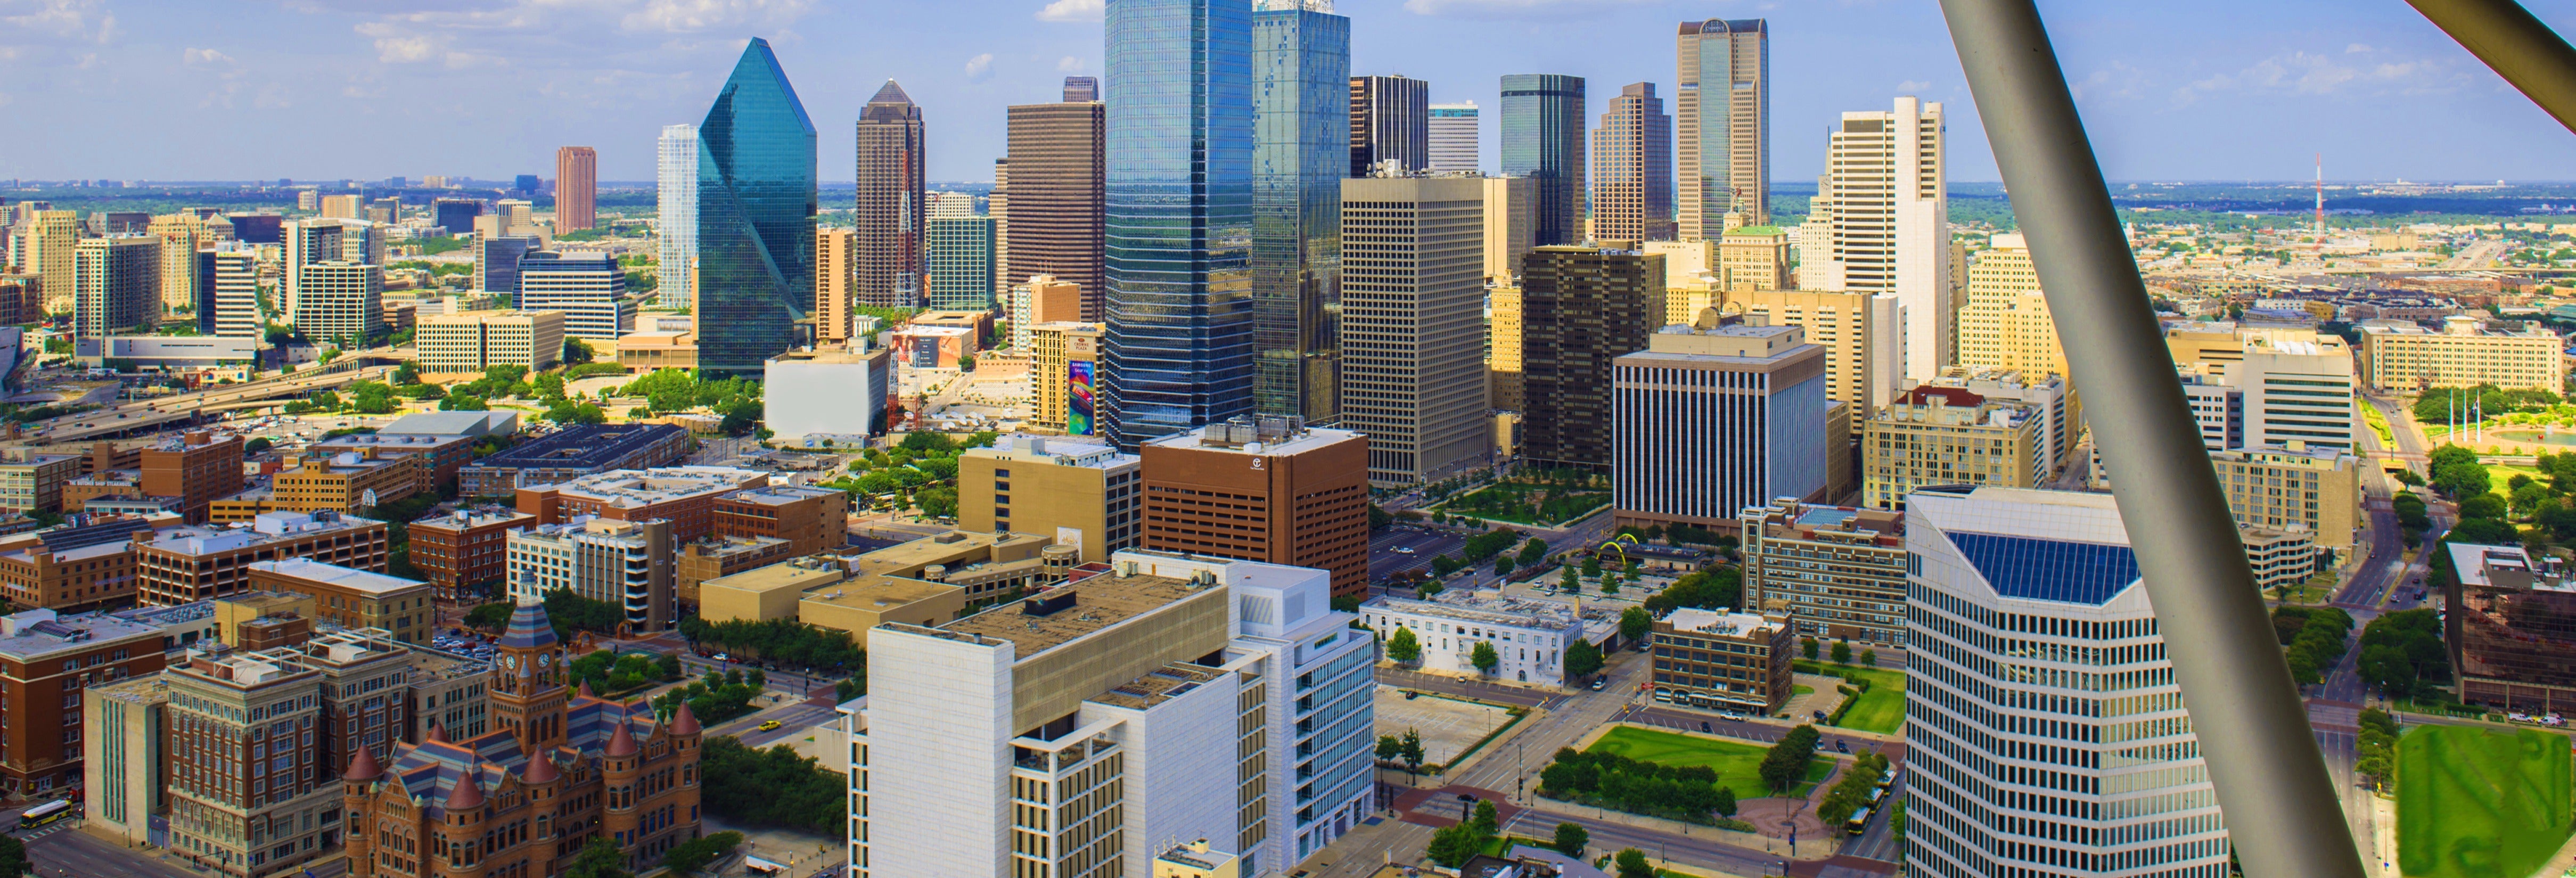 Dallas CityPASS®